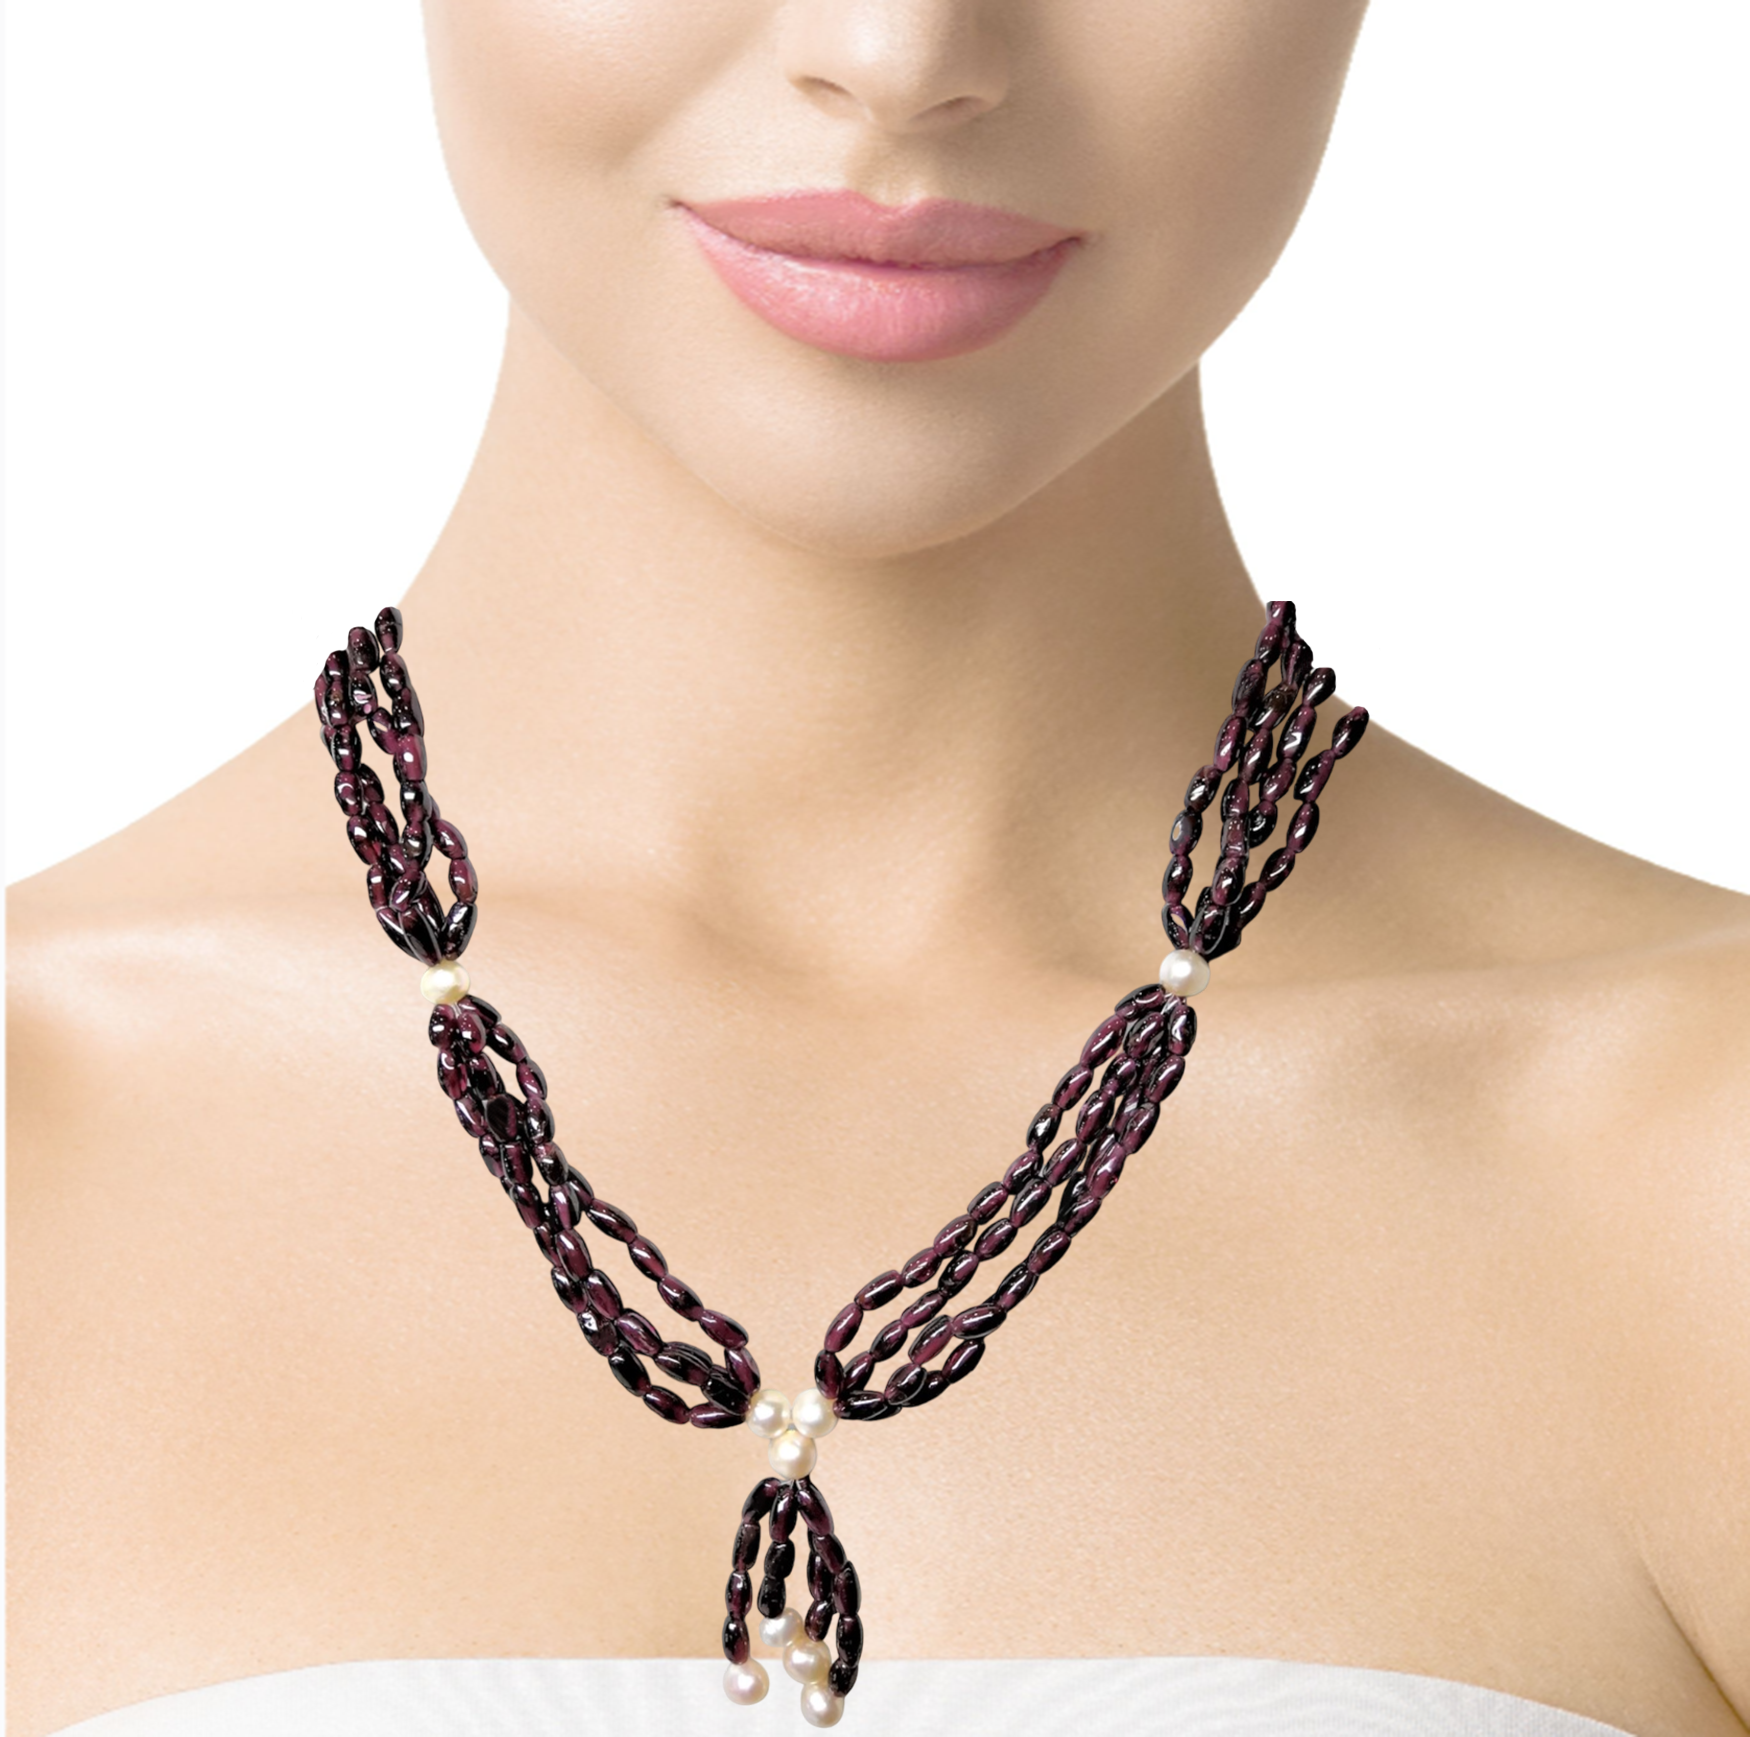 Natural Handmade Necklace 16"-18" Pearls with Garnet Gemstone Beads Jewel